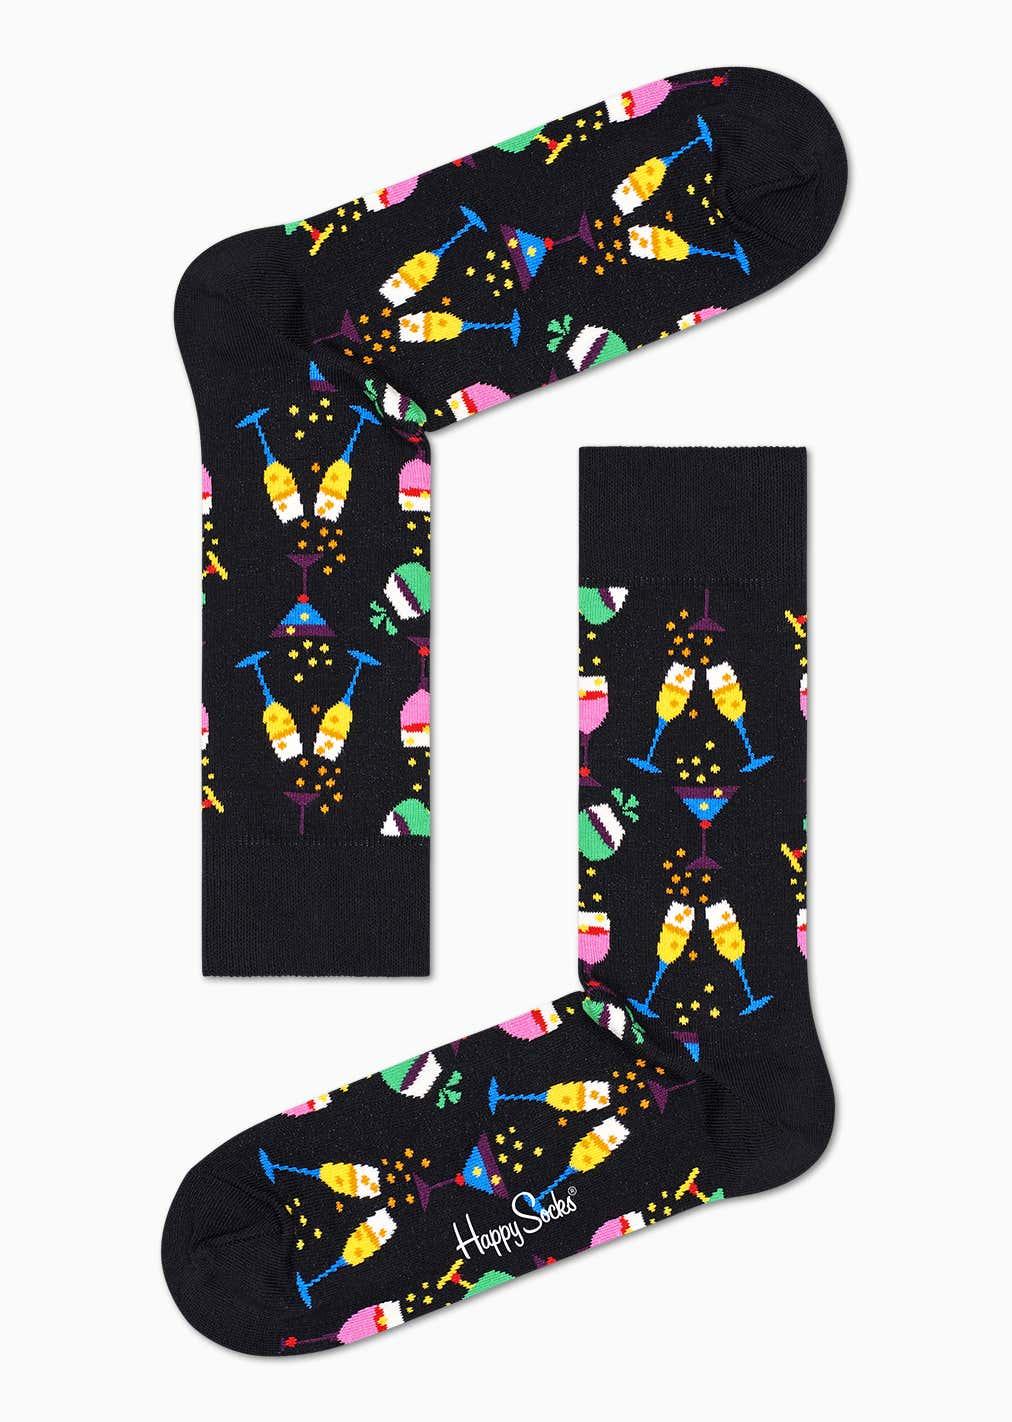 Happy Socks 3-Pack Celebration Gift Set - No Generation